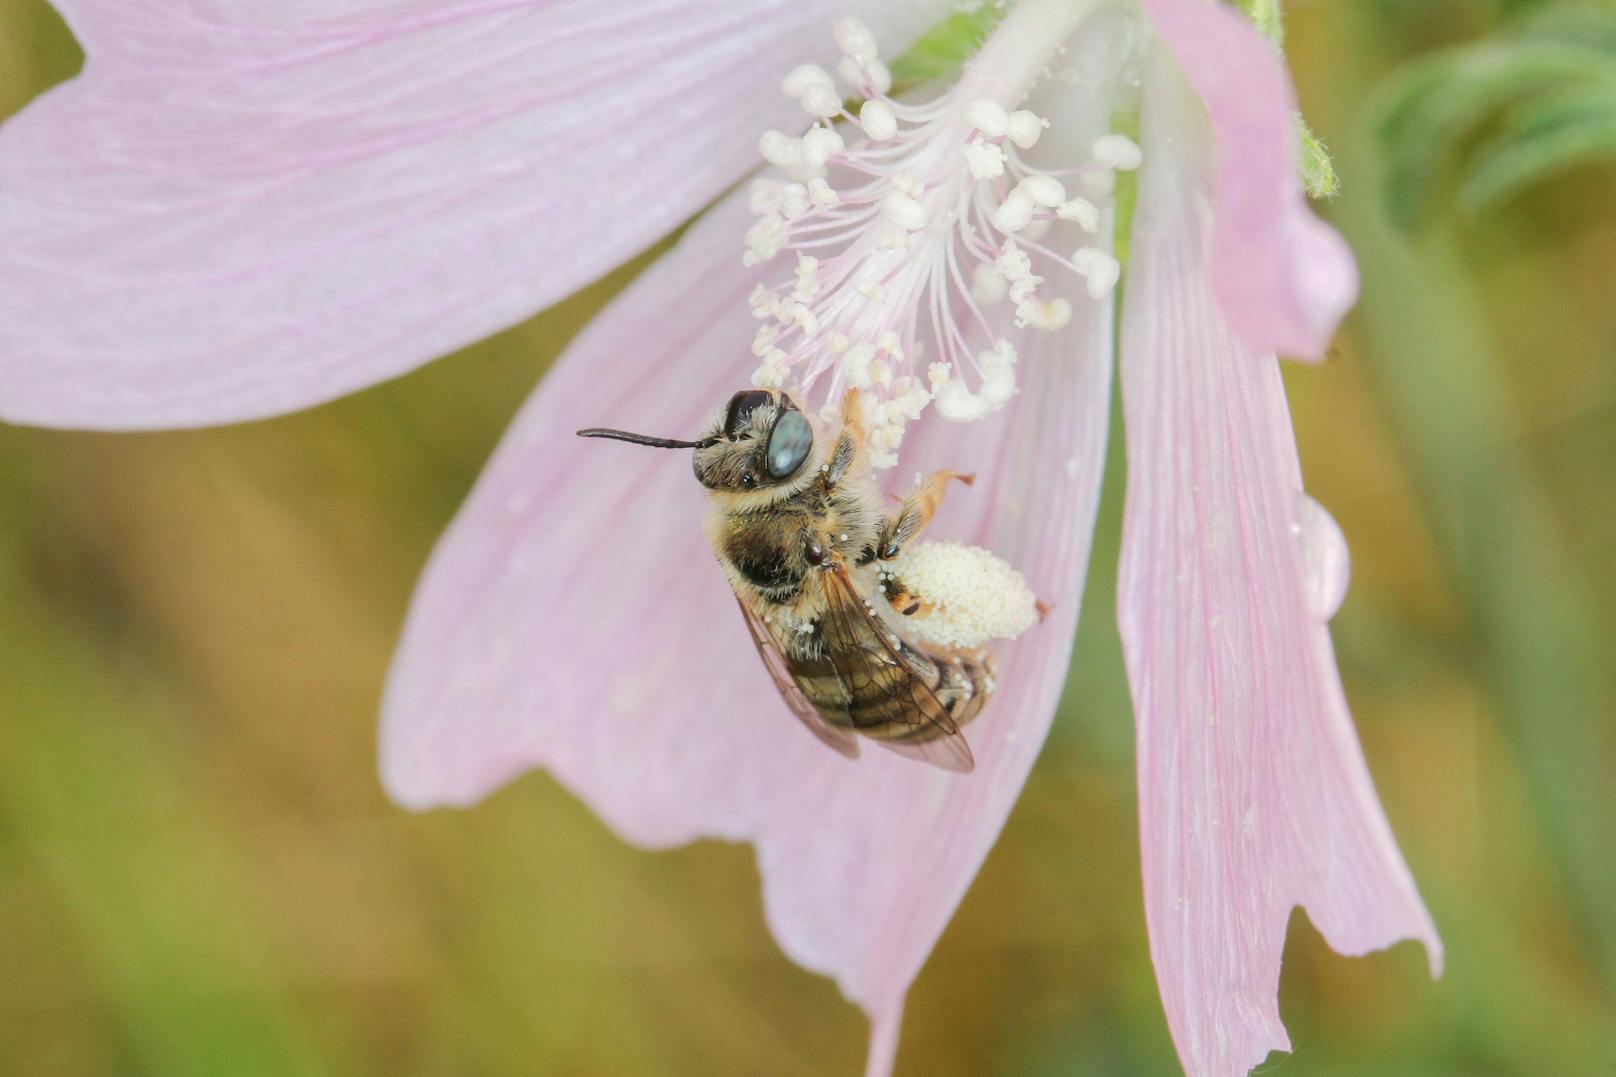 Starker Rückgang der Wildbienenvielfalt im Marchfeld